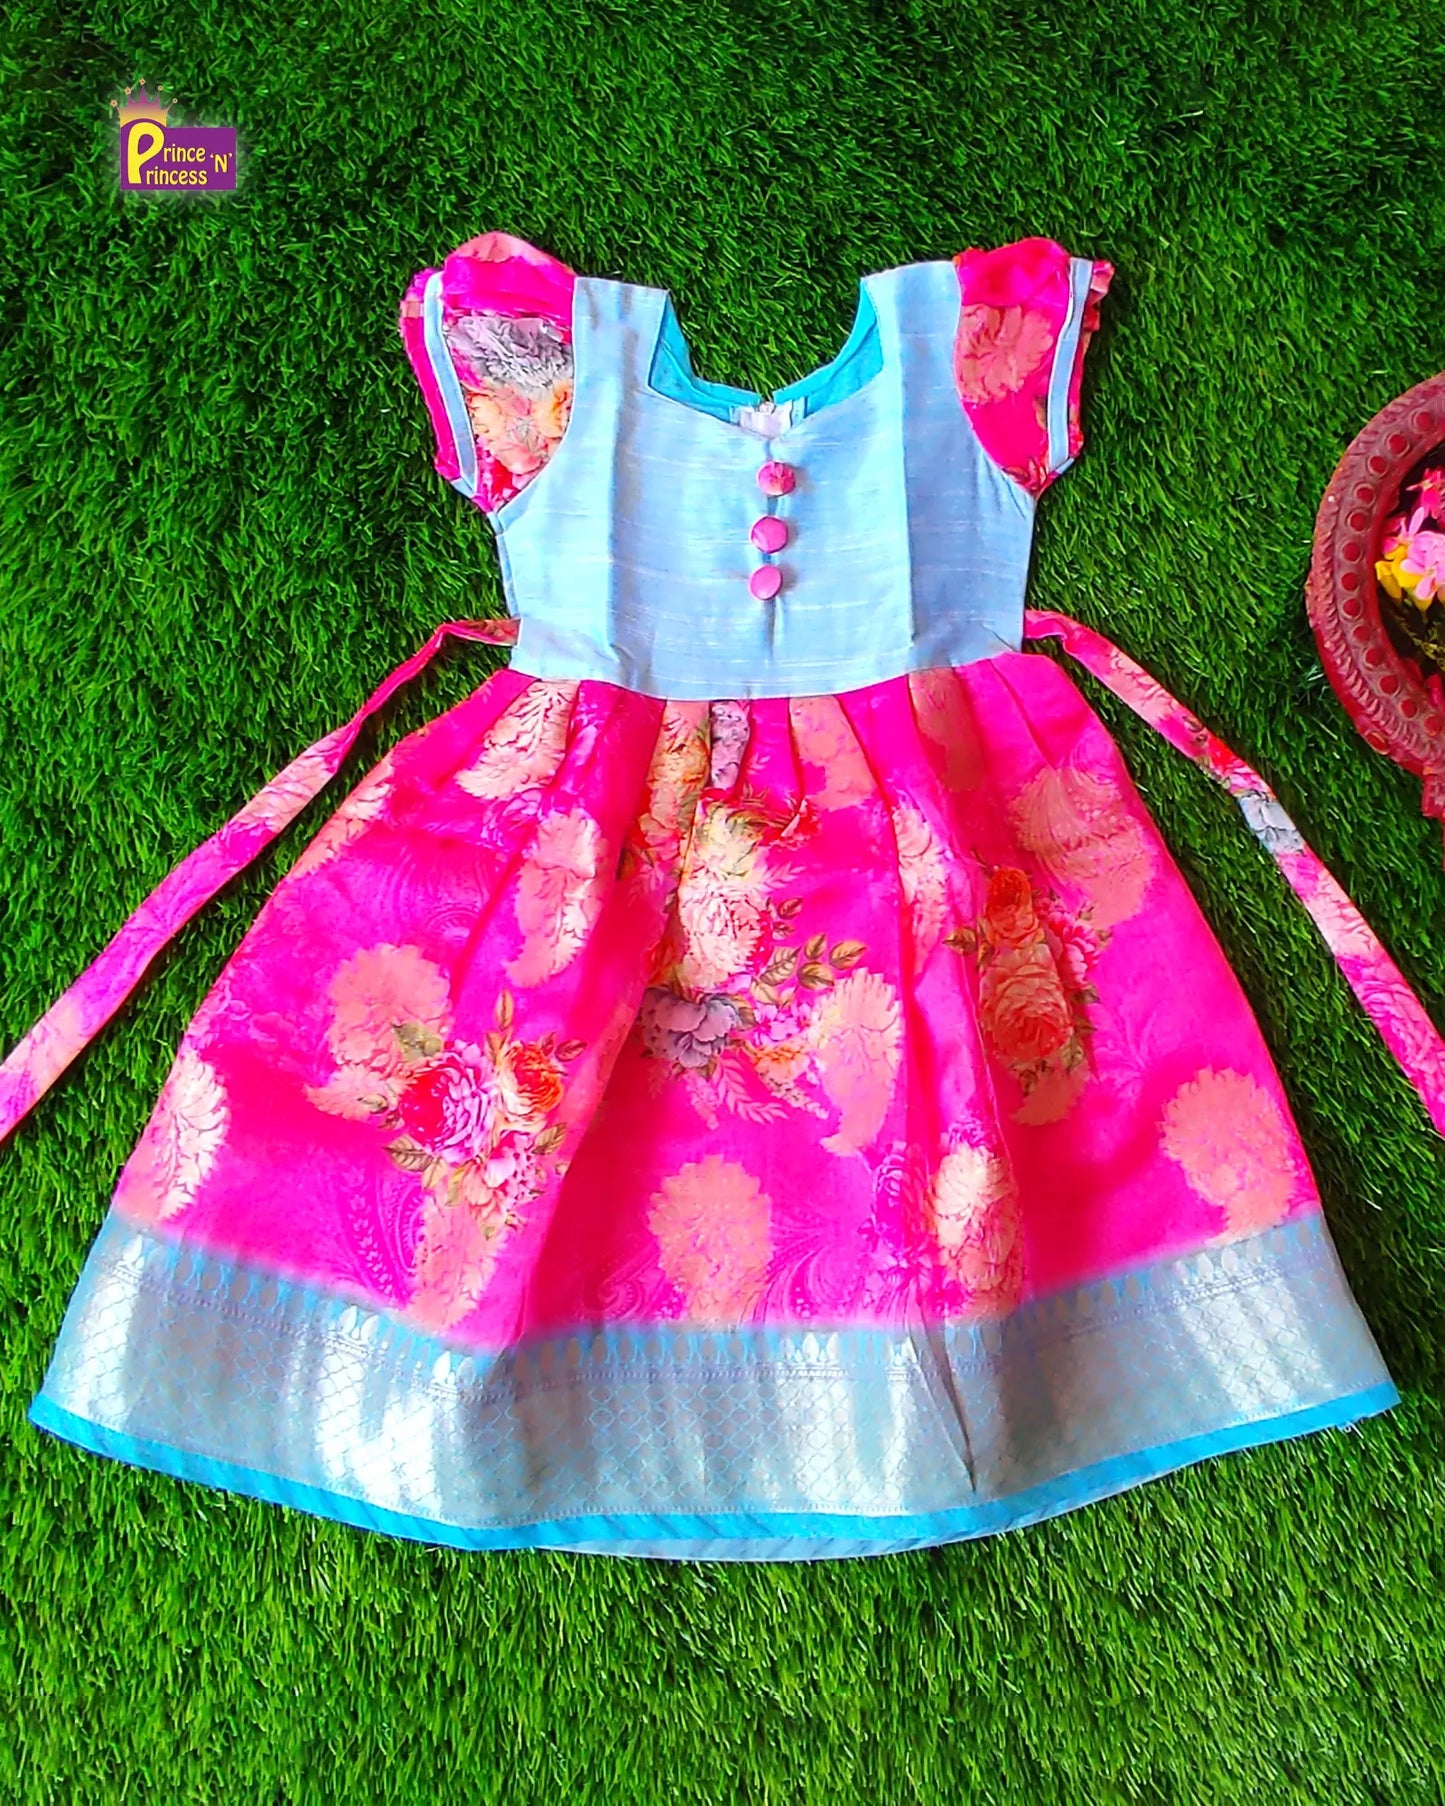 Prince N Princess Pink blue Organza Check Gown PG298